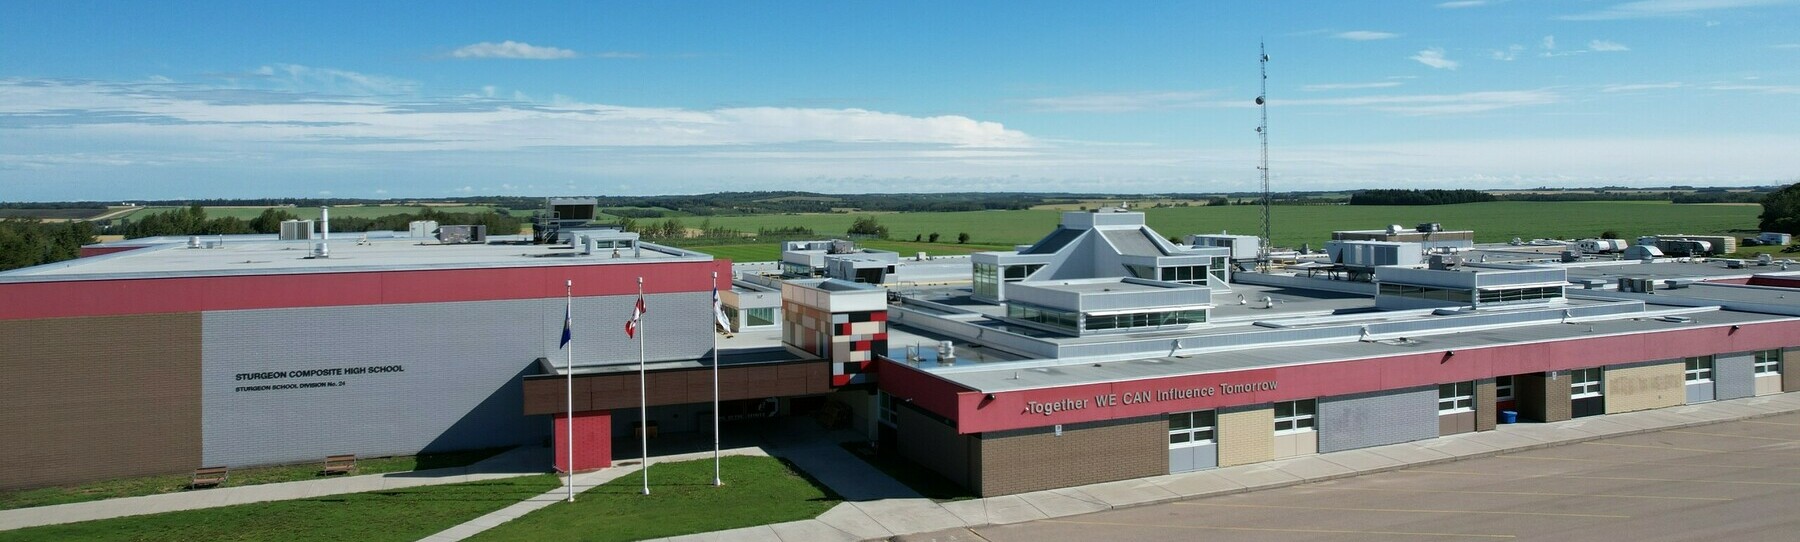 image of the school